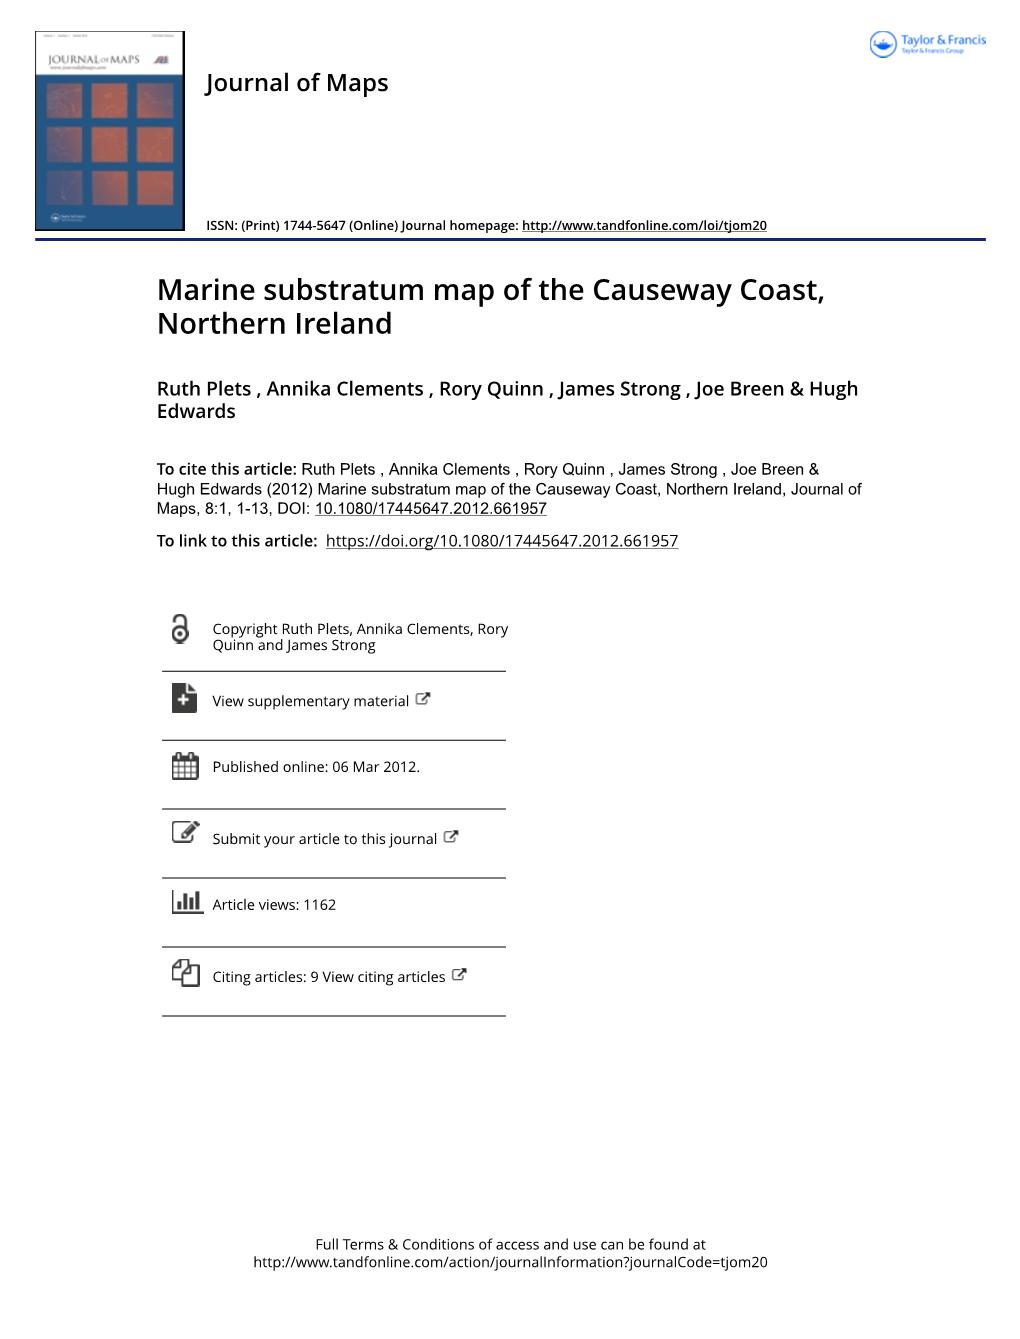 Marine Substratum Map of the Causeway Coast, Northern Ireland